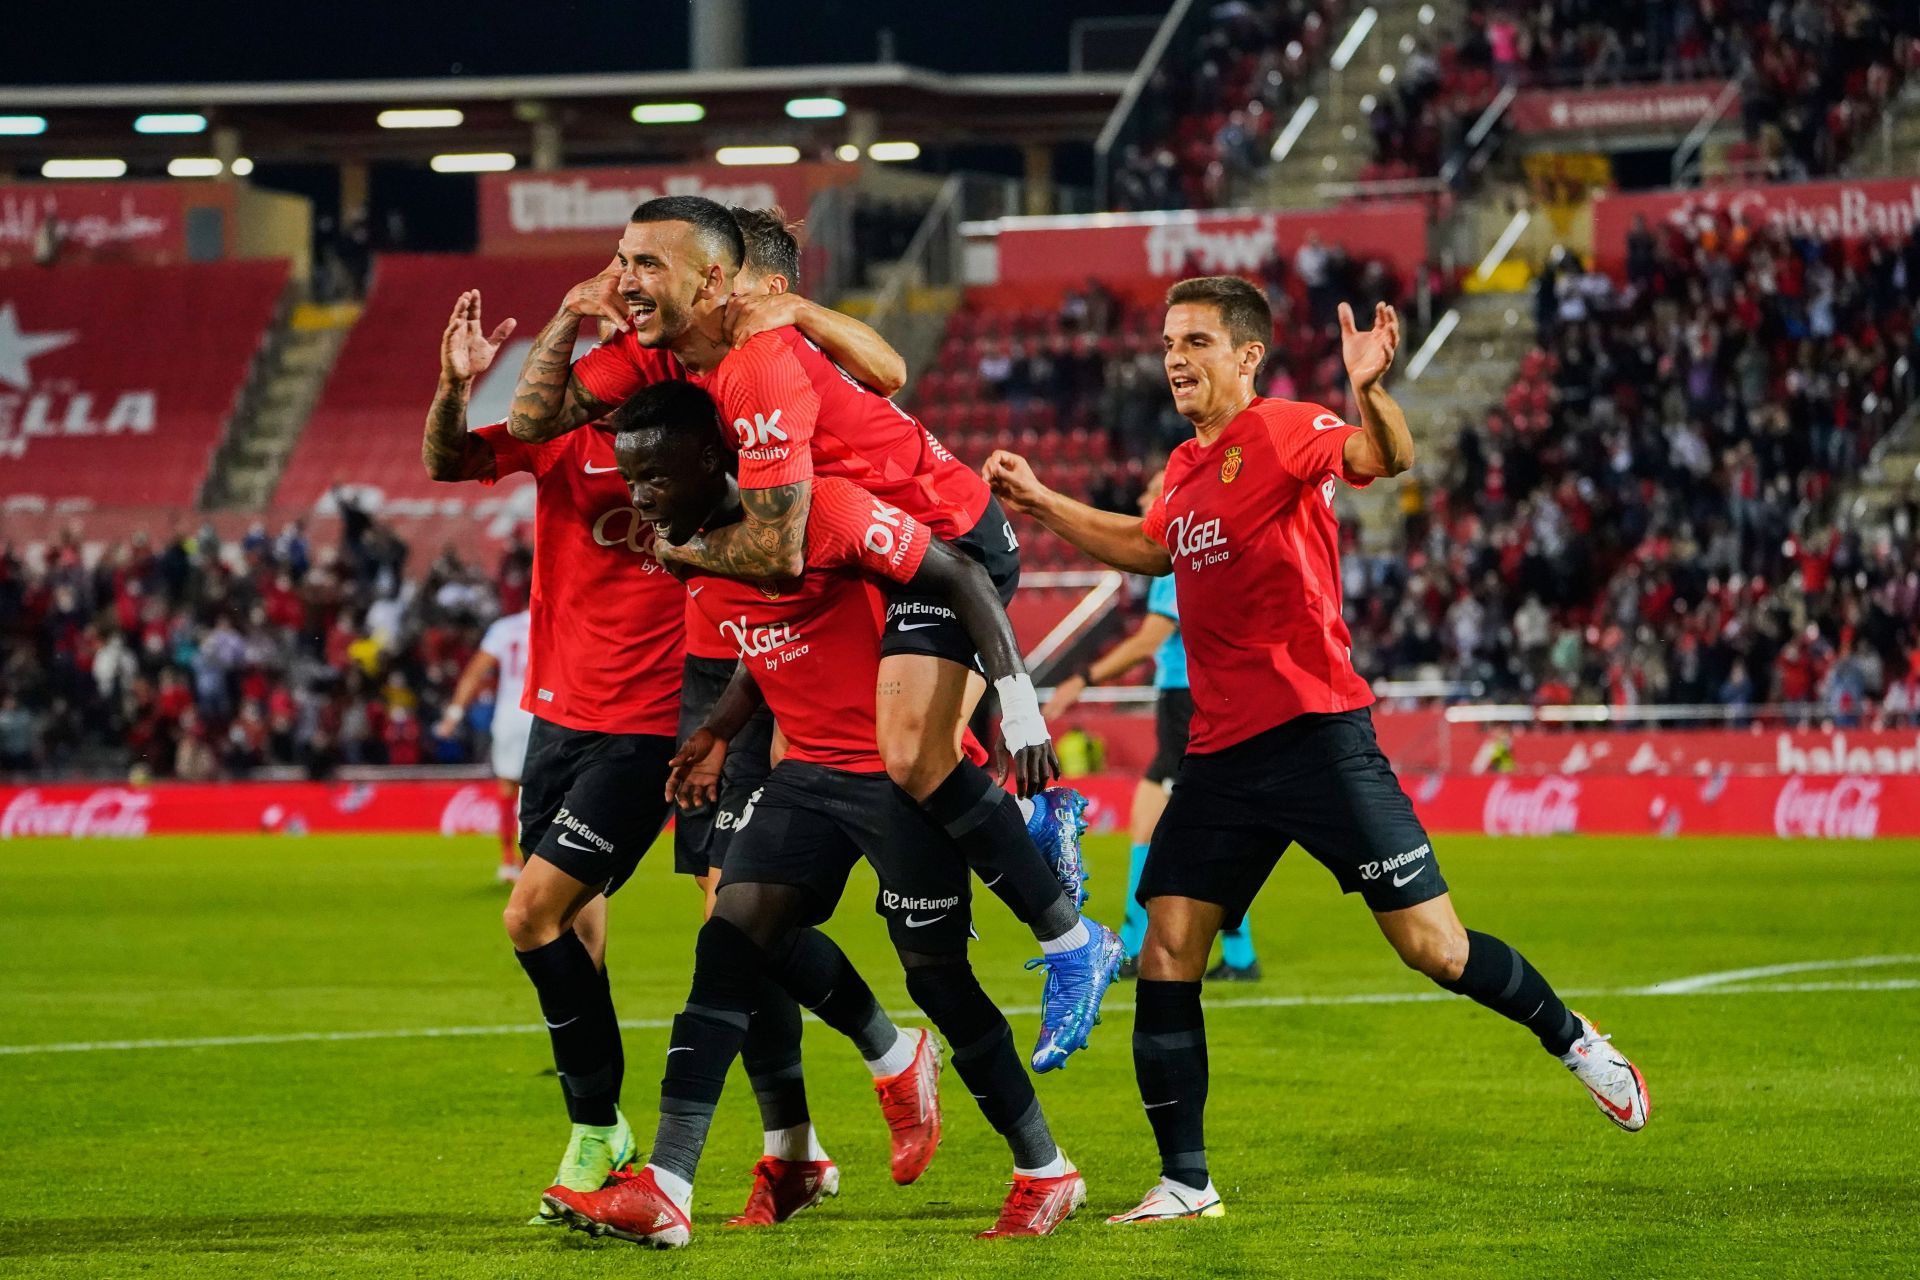 RCD Mallorca take on Cadiz in their upcoming La Liga fixture